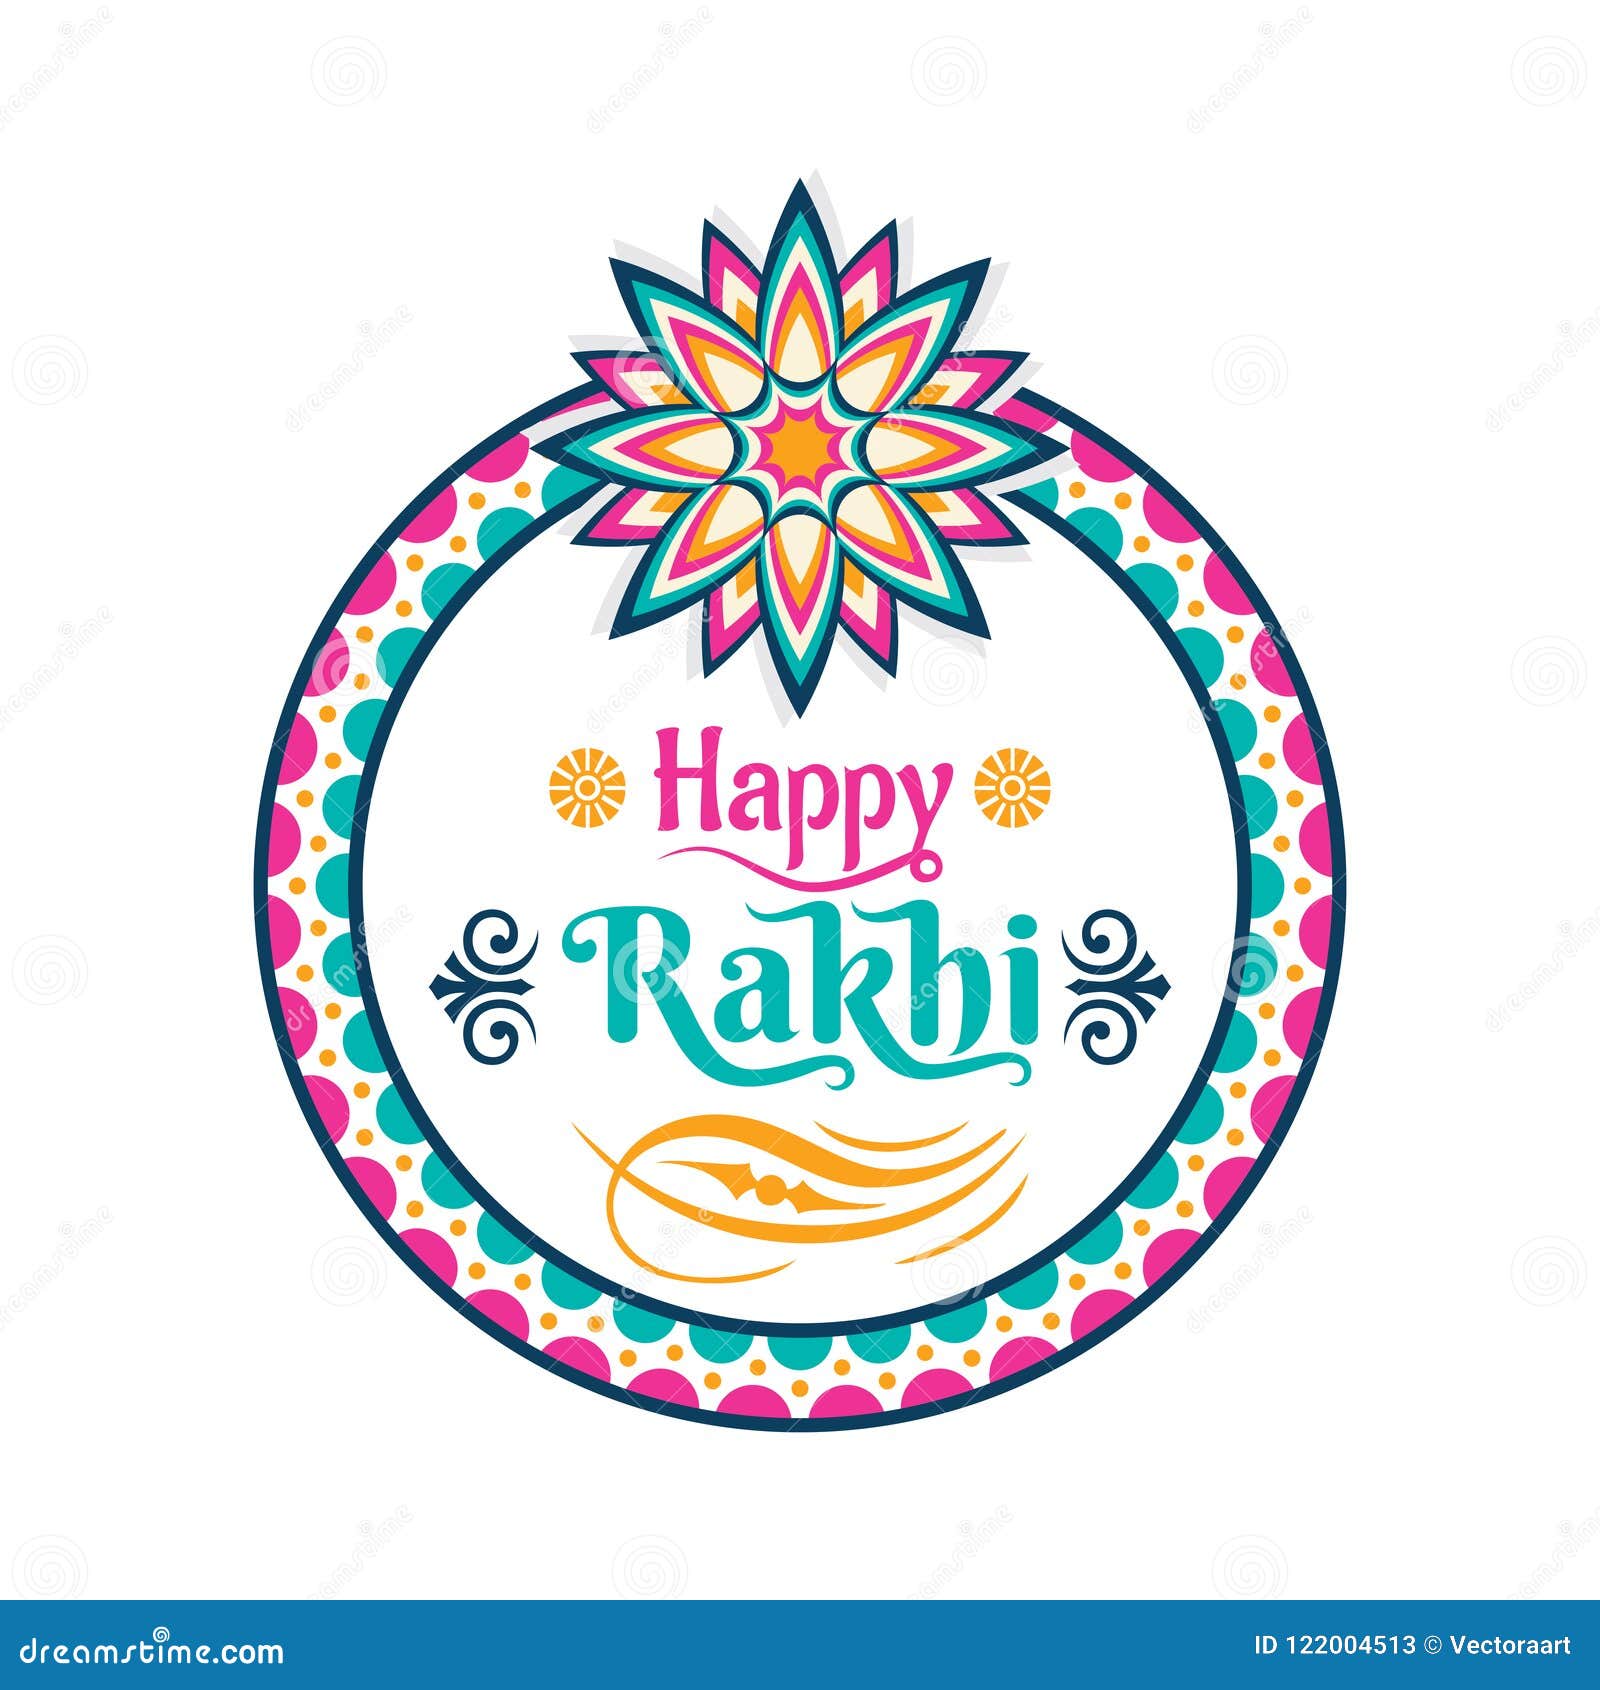 Decorative Happy Rakhi Festival Greeting Card Design Stock Vector ...